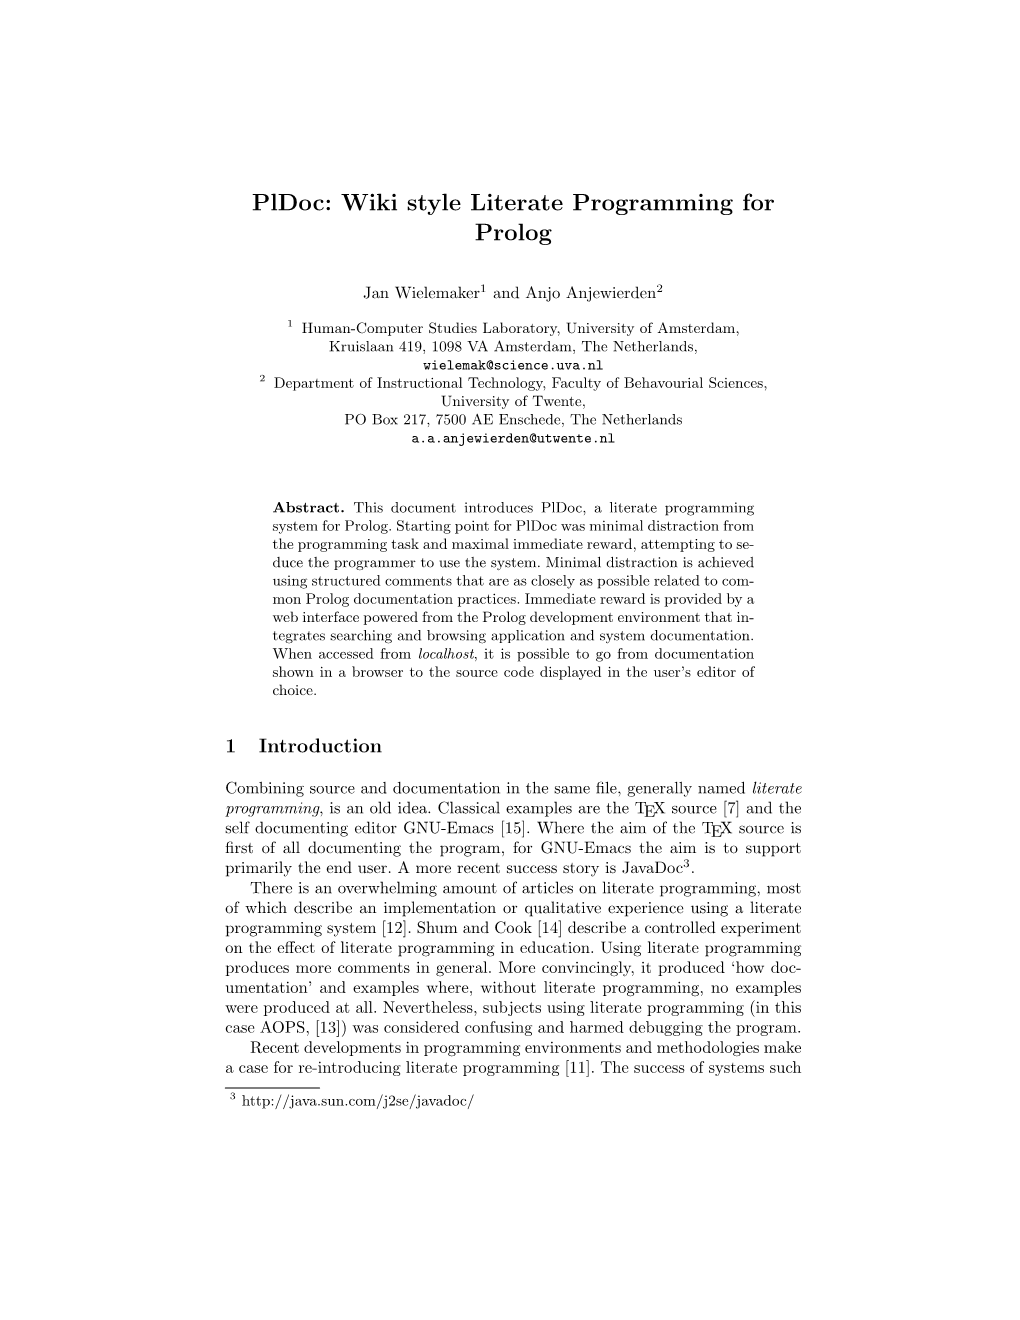 Pldoc: Wiki Style Literate Programming for Prolog